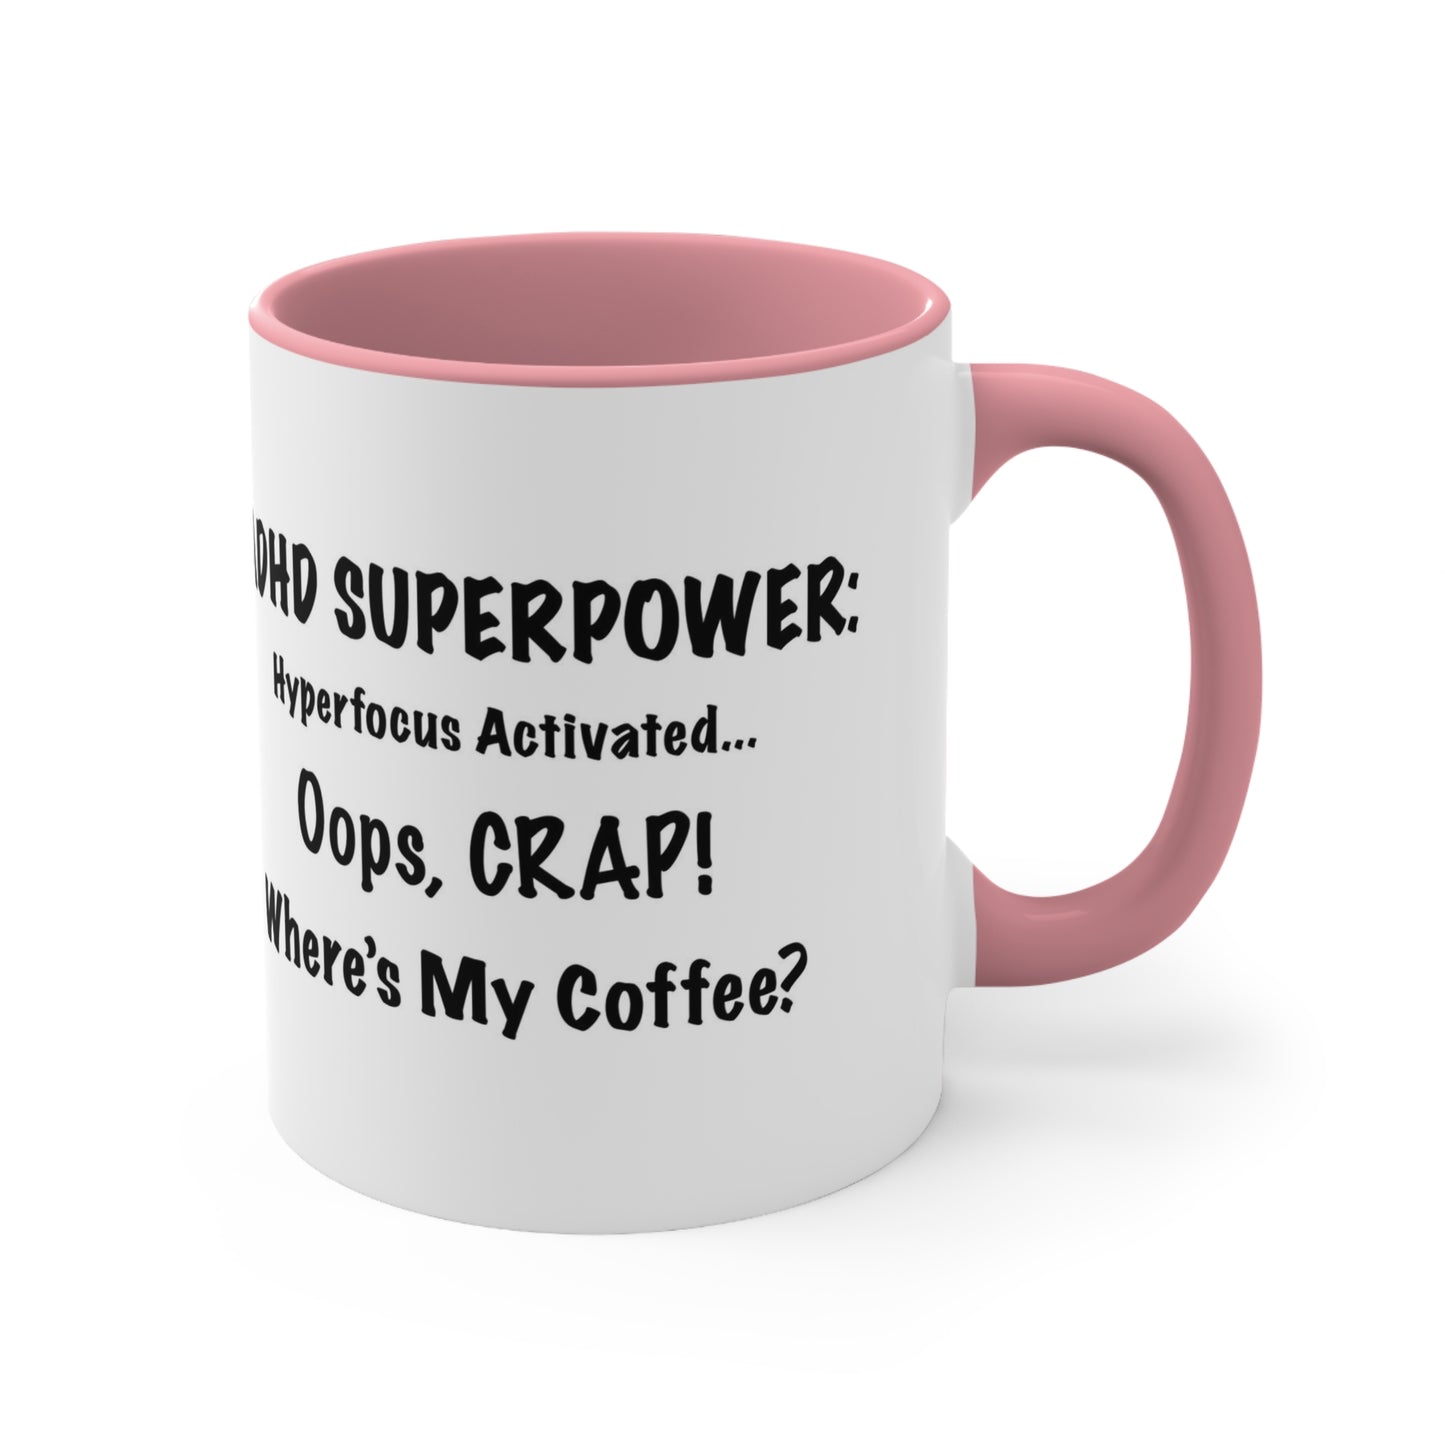 ADHD Inspired Coffee Mug - 'Oops, CRAP! Where's My Coffee?'